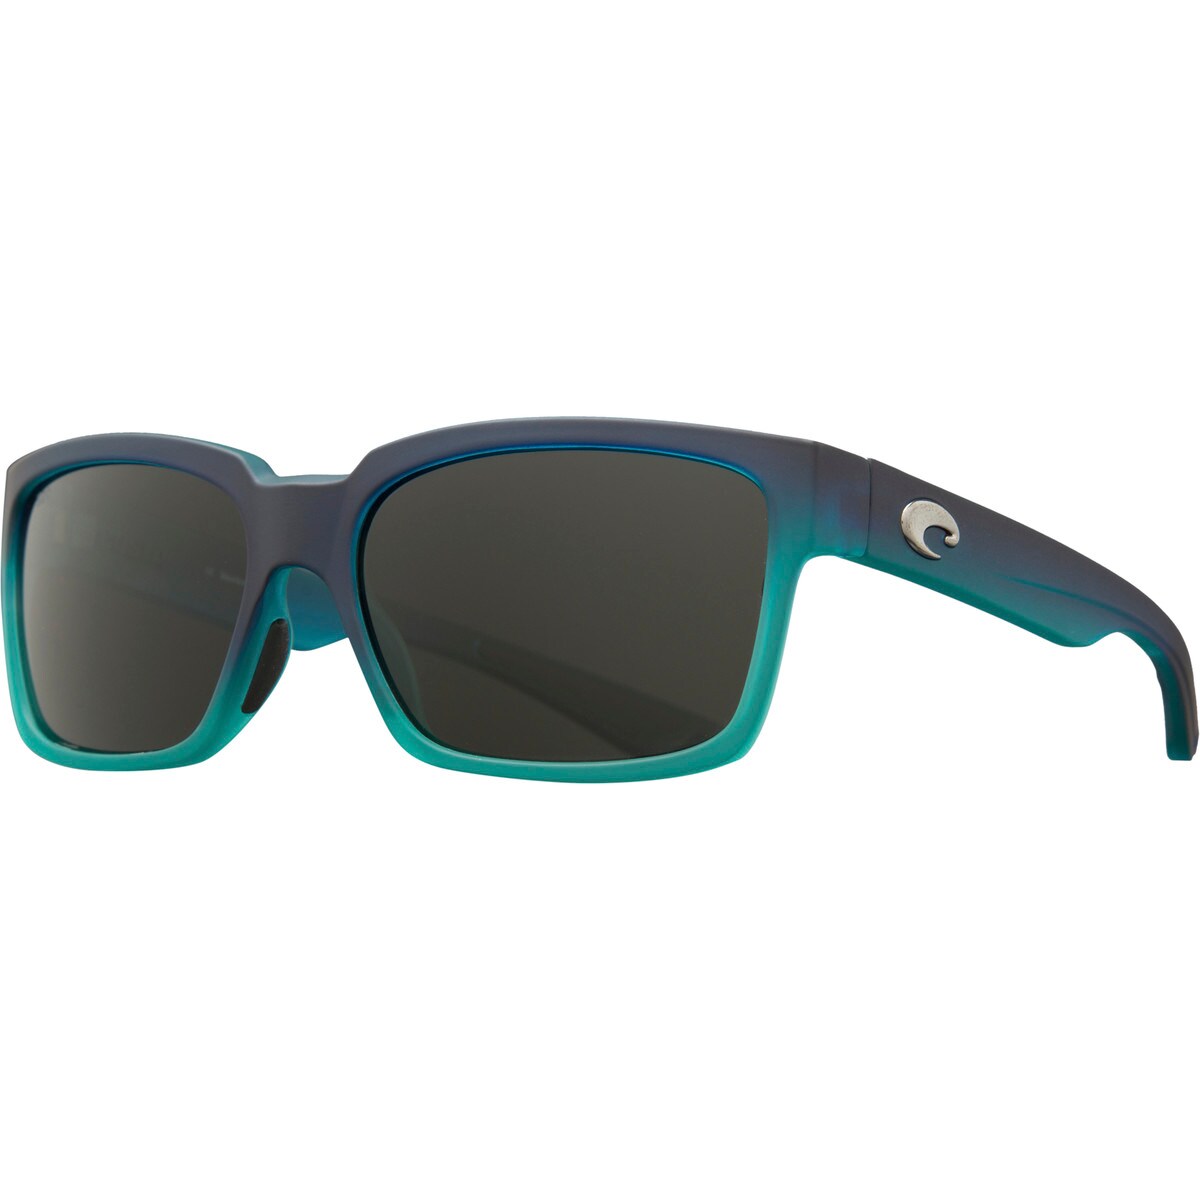 Costa Playa Polarized Sunglasses 580 Glass Lens Ebay